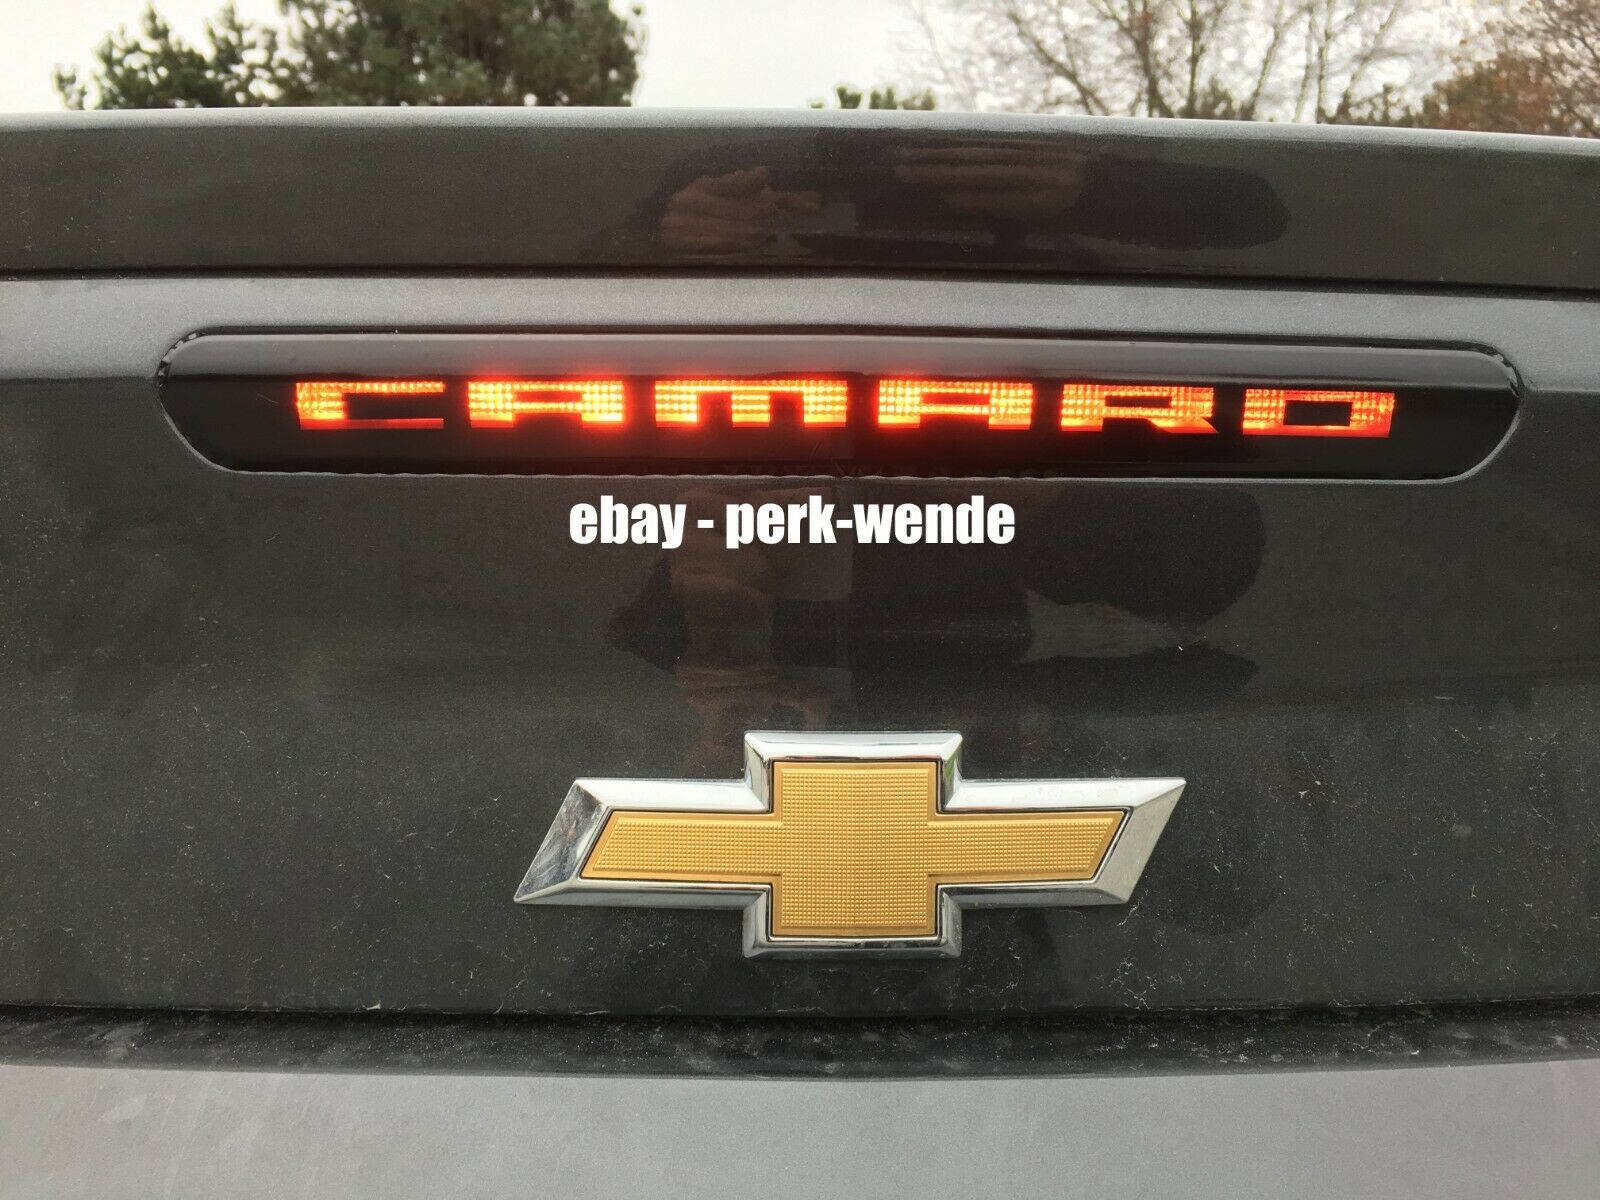 Chevy Camaro 14 15 / 16 17 18 19 2020 2021 3rd Brake Light Decal Rs Ss Z28 2ss